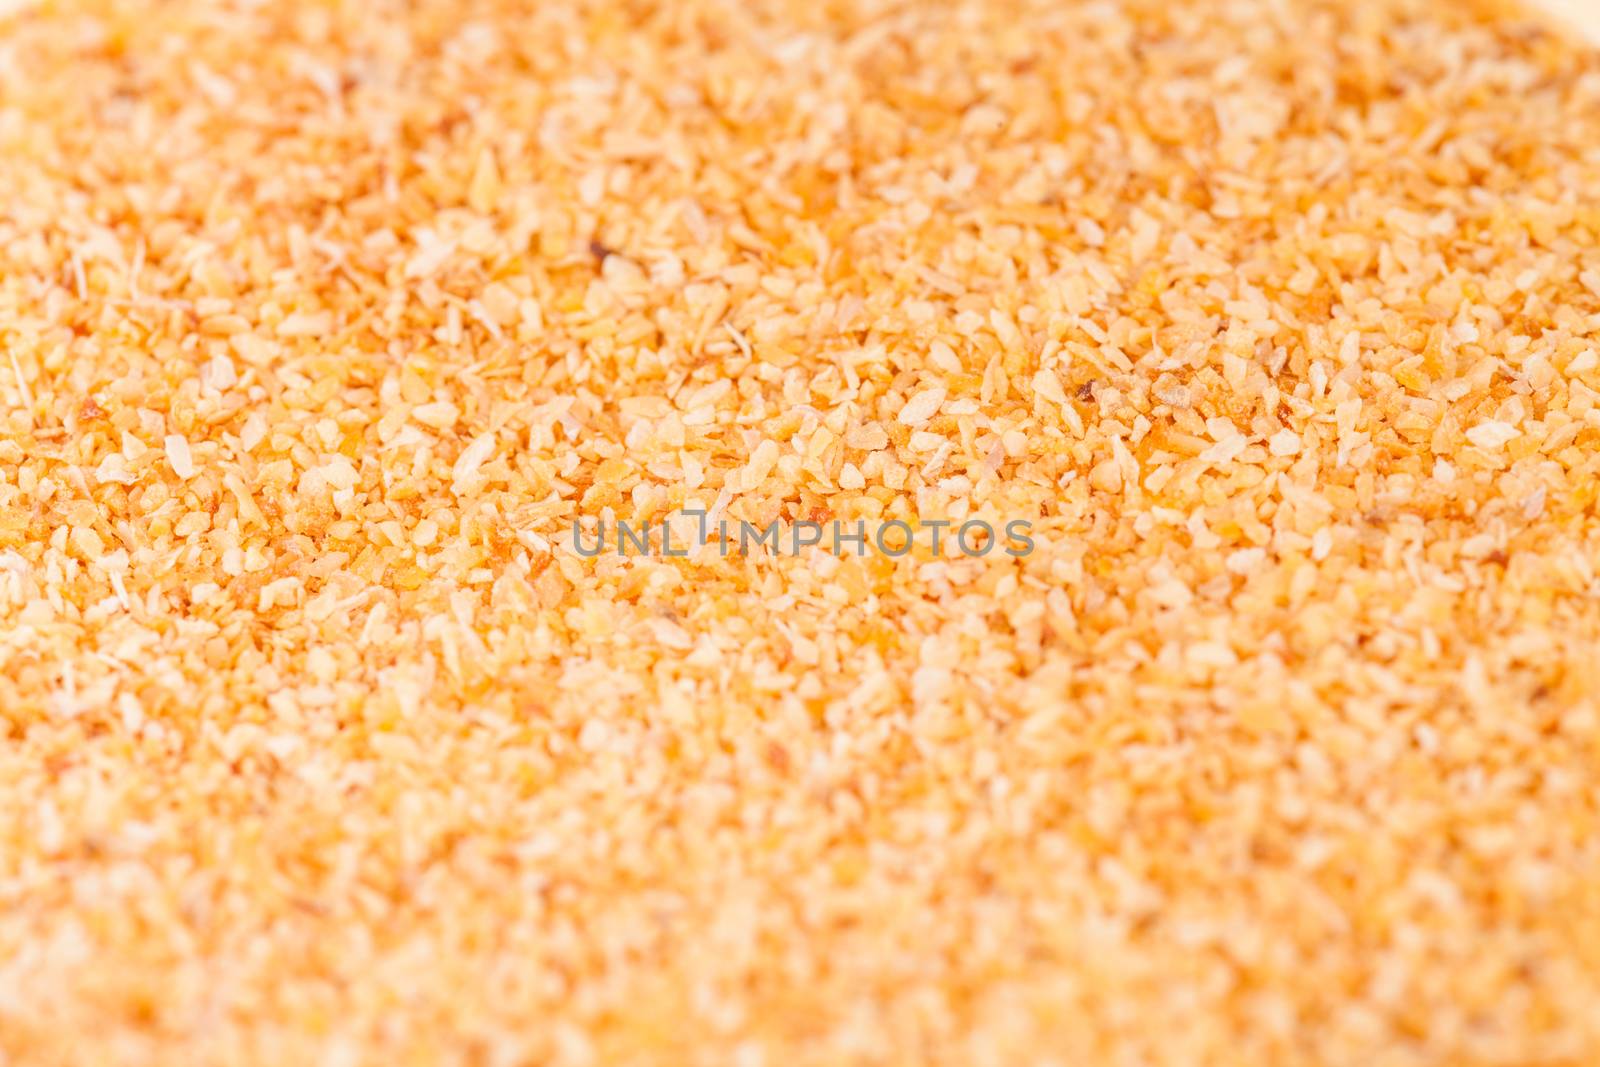 Dried Garlic Powder Extreme Closeup Macro Texture